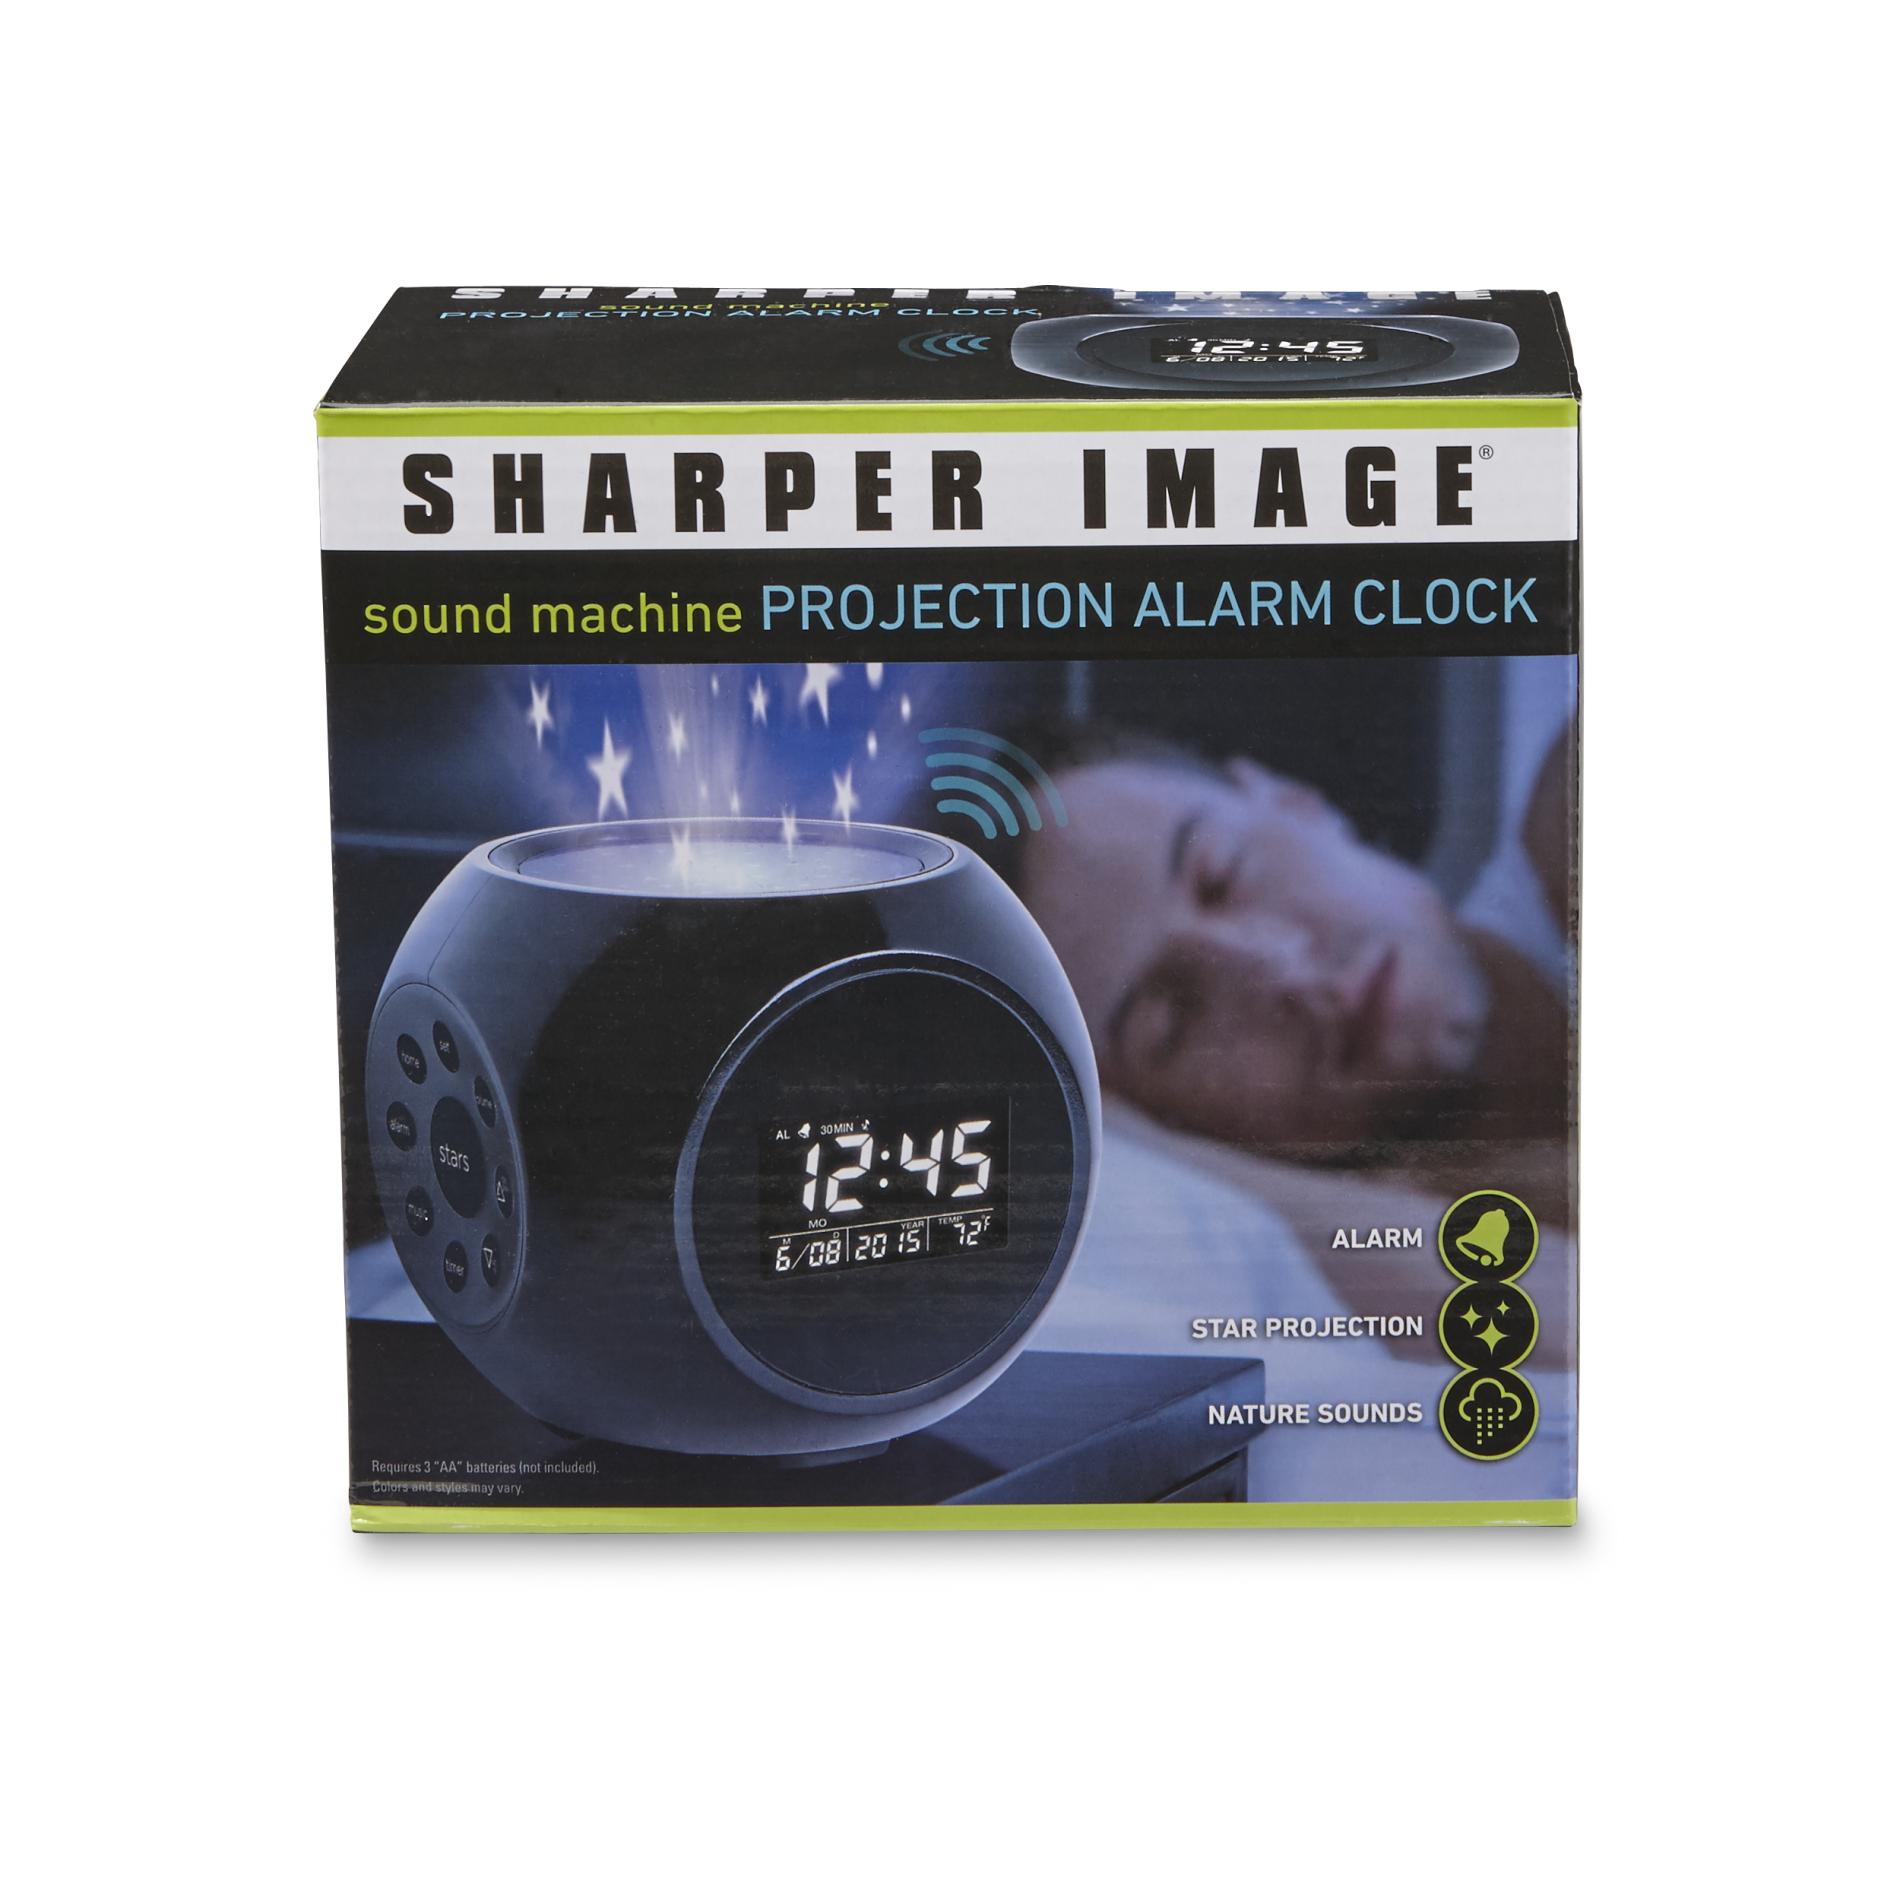 The Sharper Image 1520045 Sound Machine Projection Alarm Clock